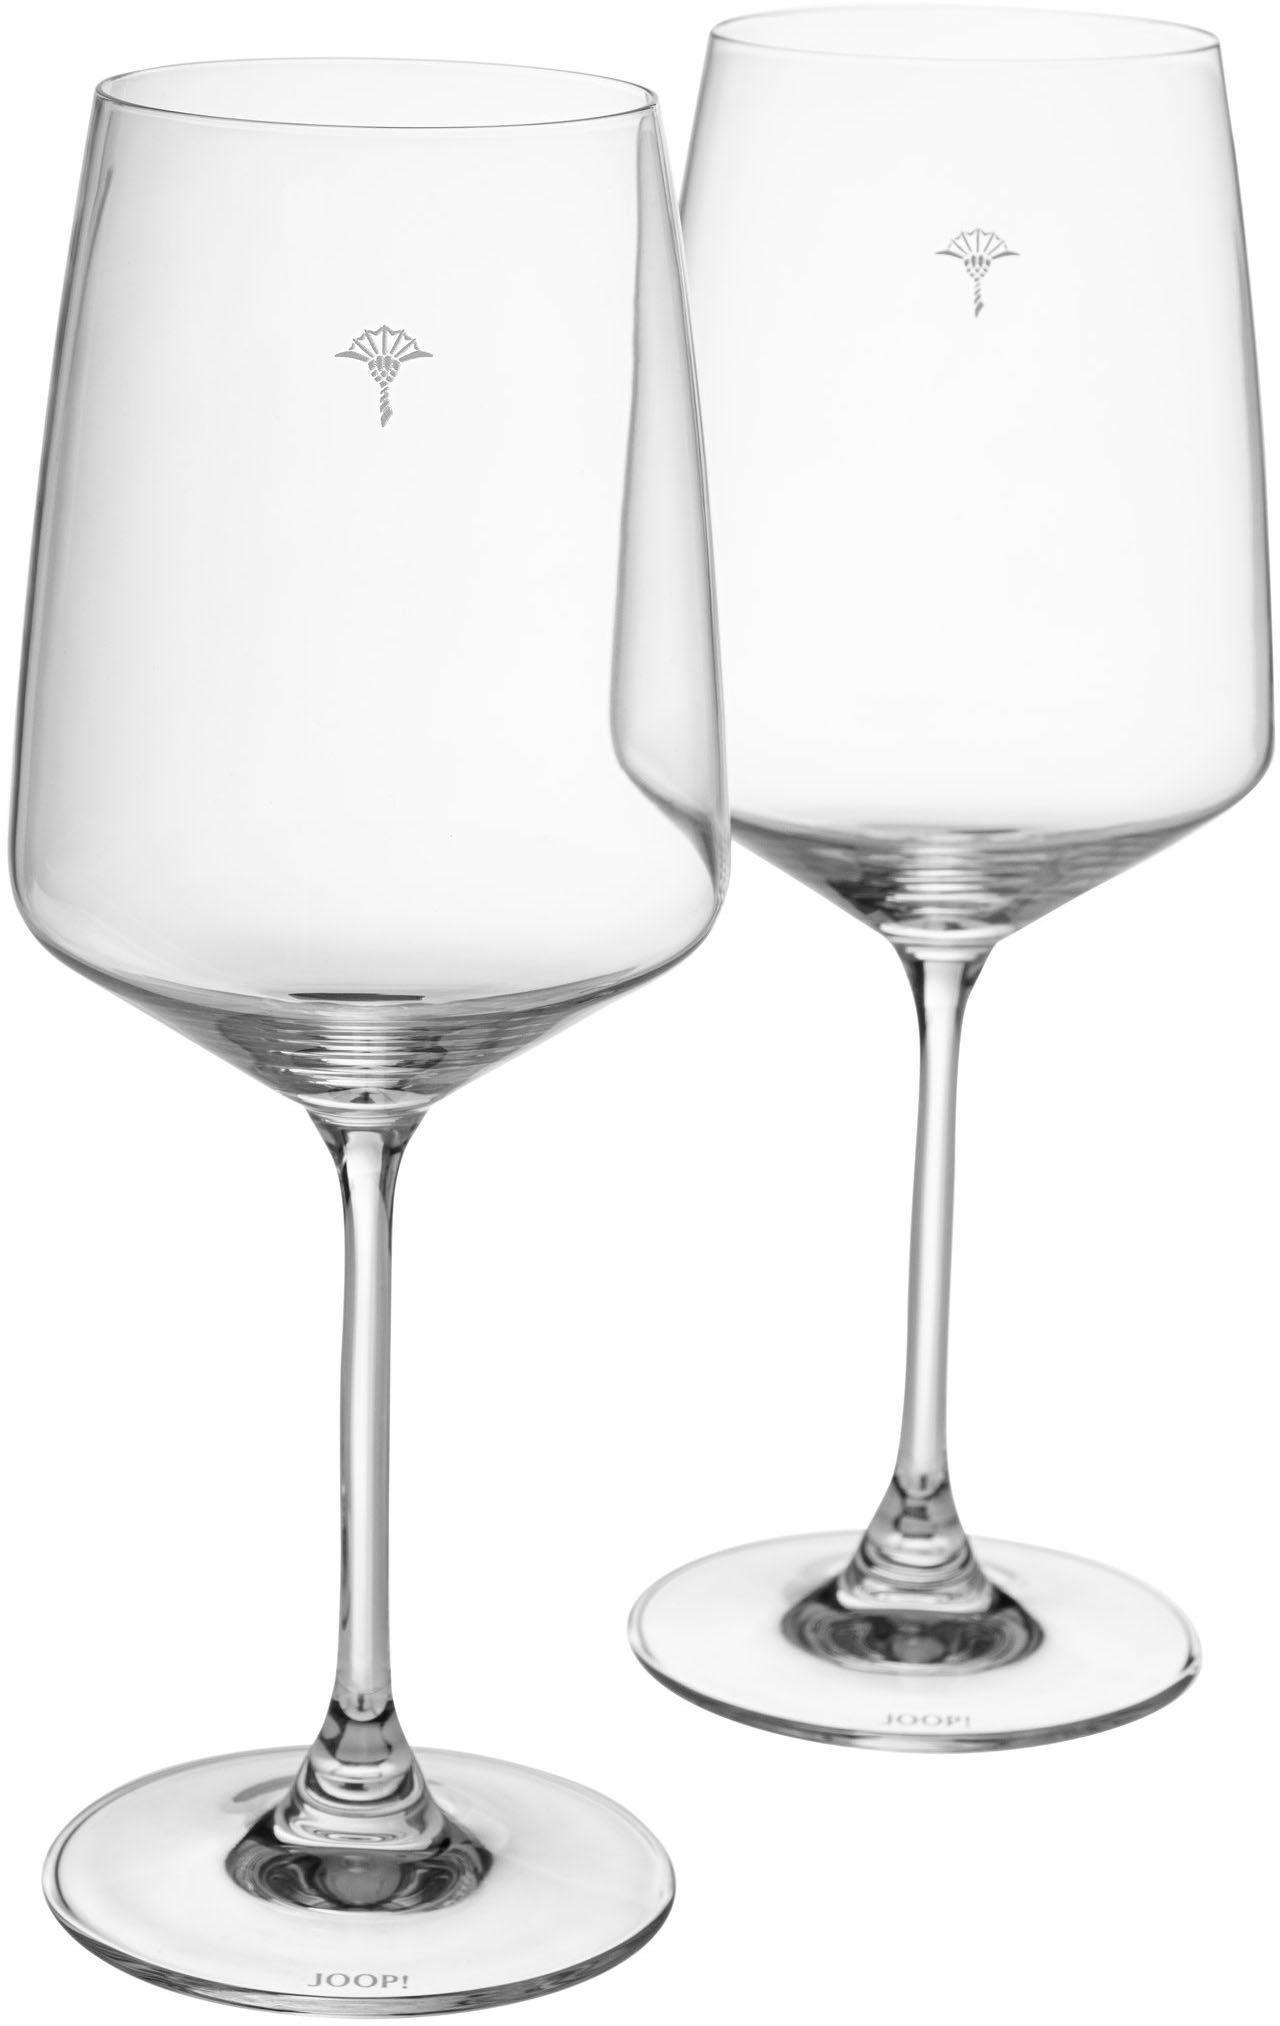 Joop! Weinglas JOOP! LIVING - SINGLE CORNFLOWER Rotweinglas 2er Set, Glas,  Mit JOOP! Label als traditionelle Bodenmarke